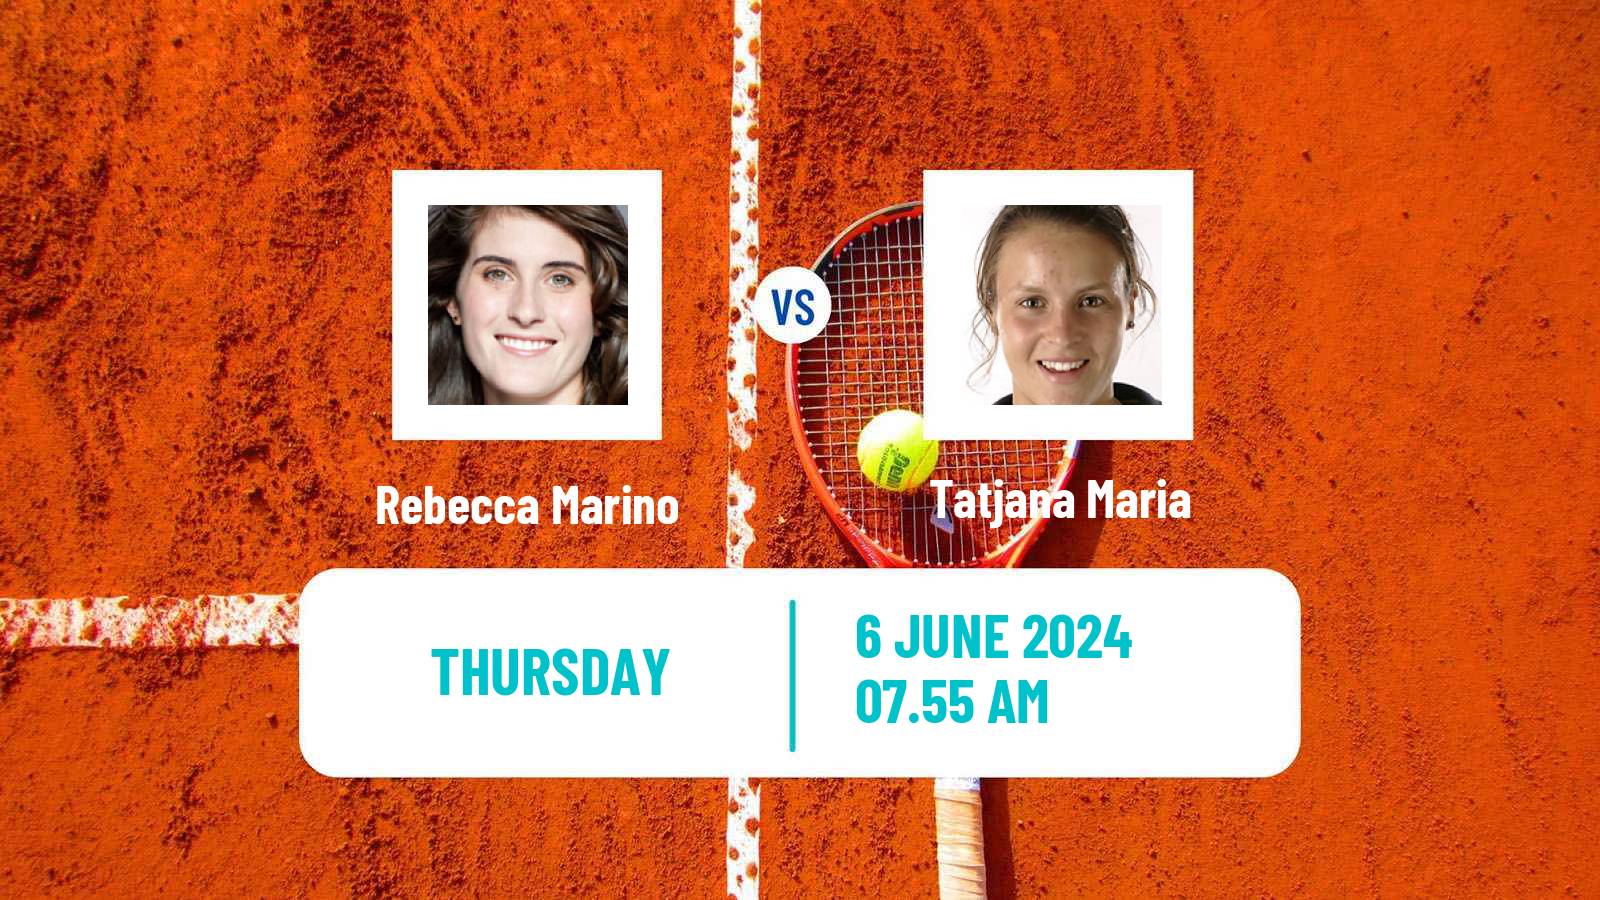 Tennis ITF W100 Surbiton Women Rebecca Marino - Tatjana Maria